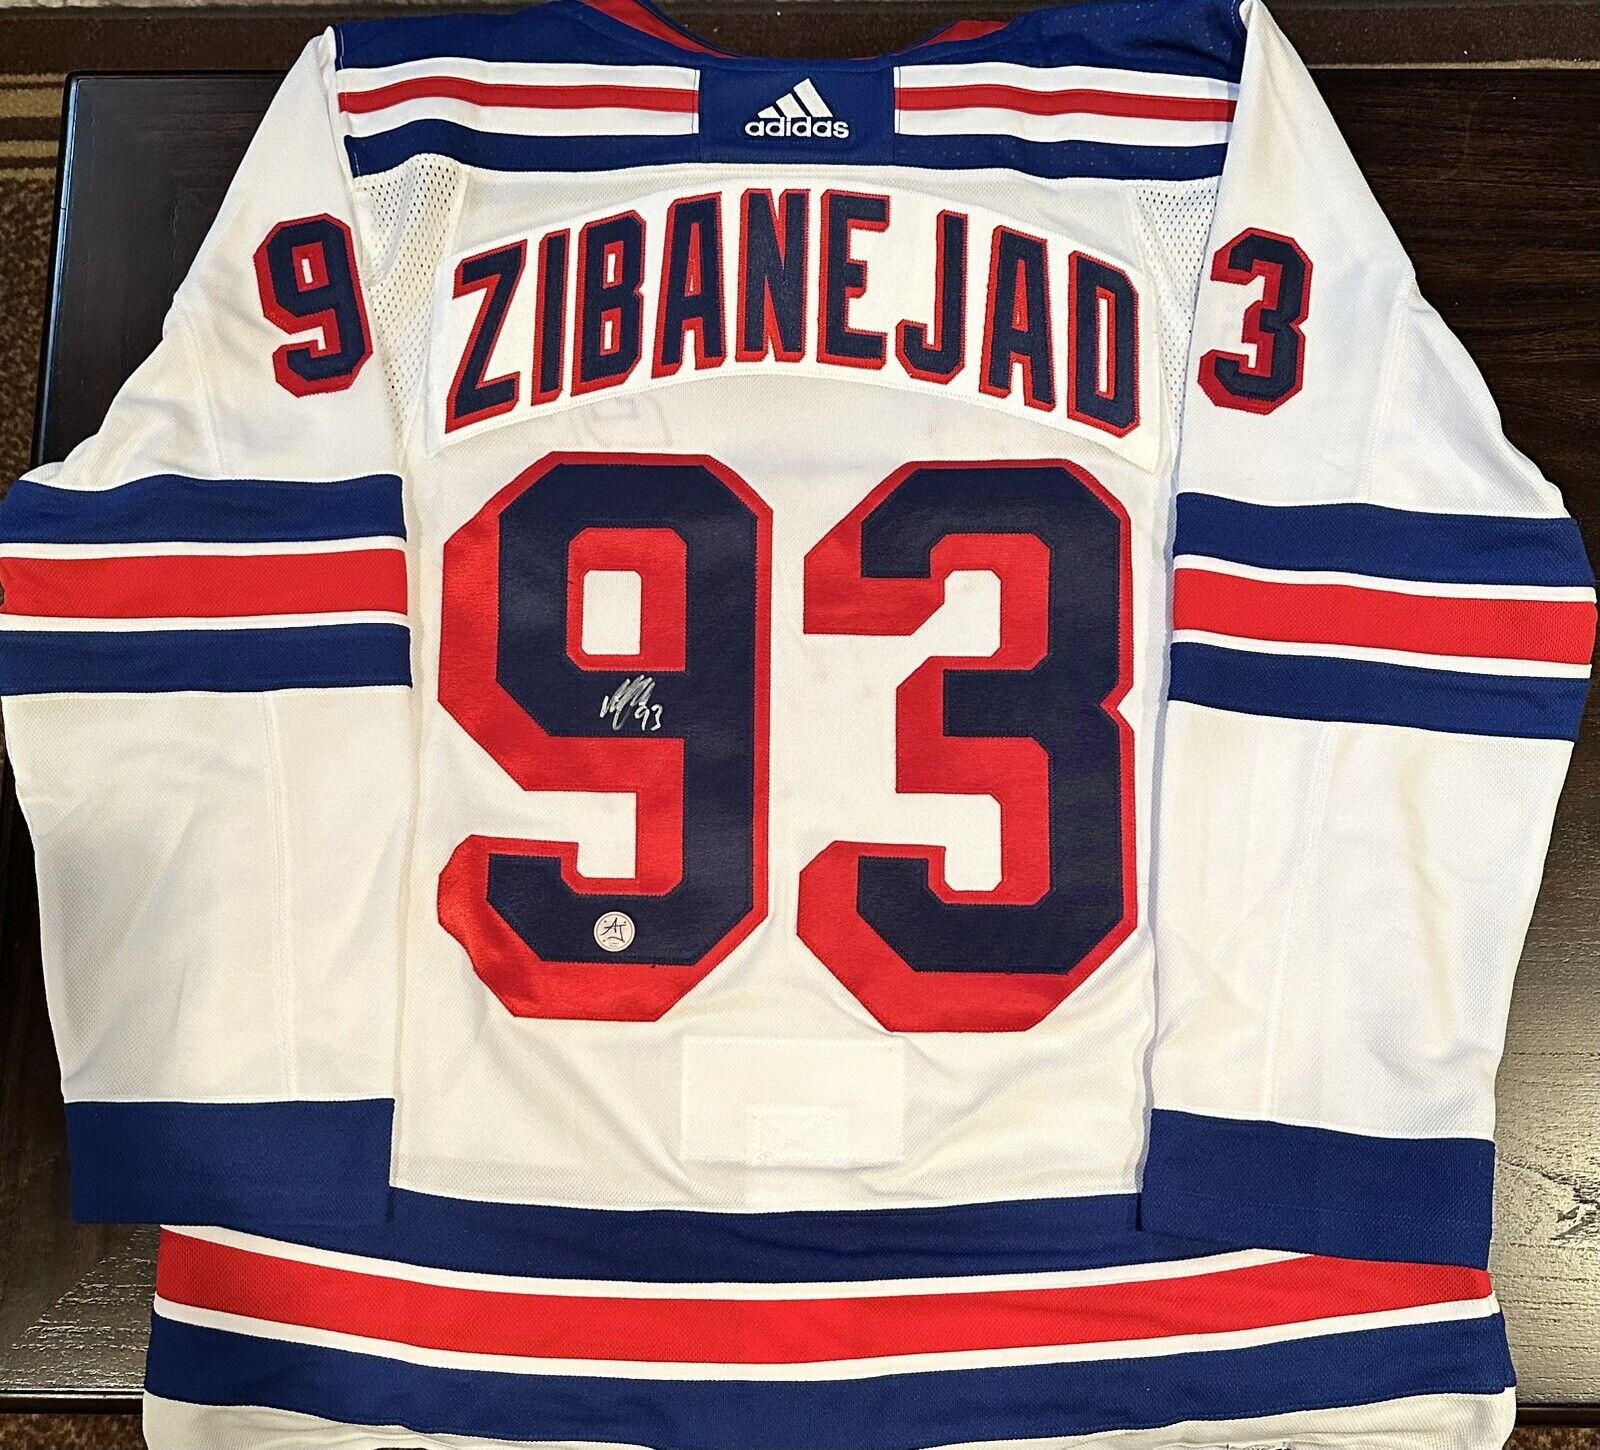 Mika Zibanejad #93 New York Rangers Signed Away (White) Adidas Jersey